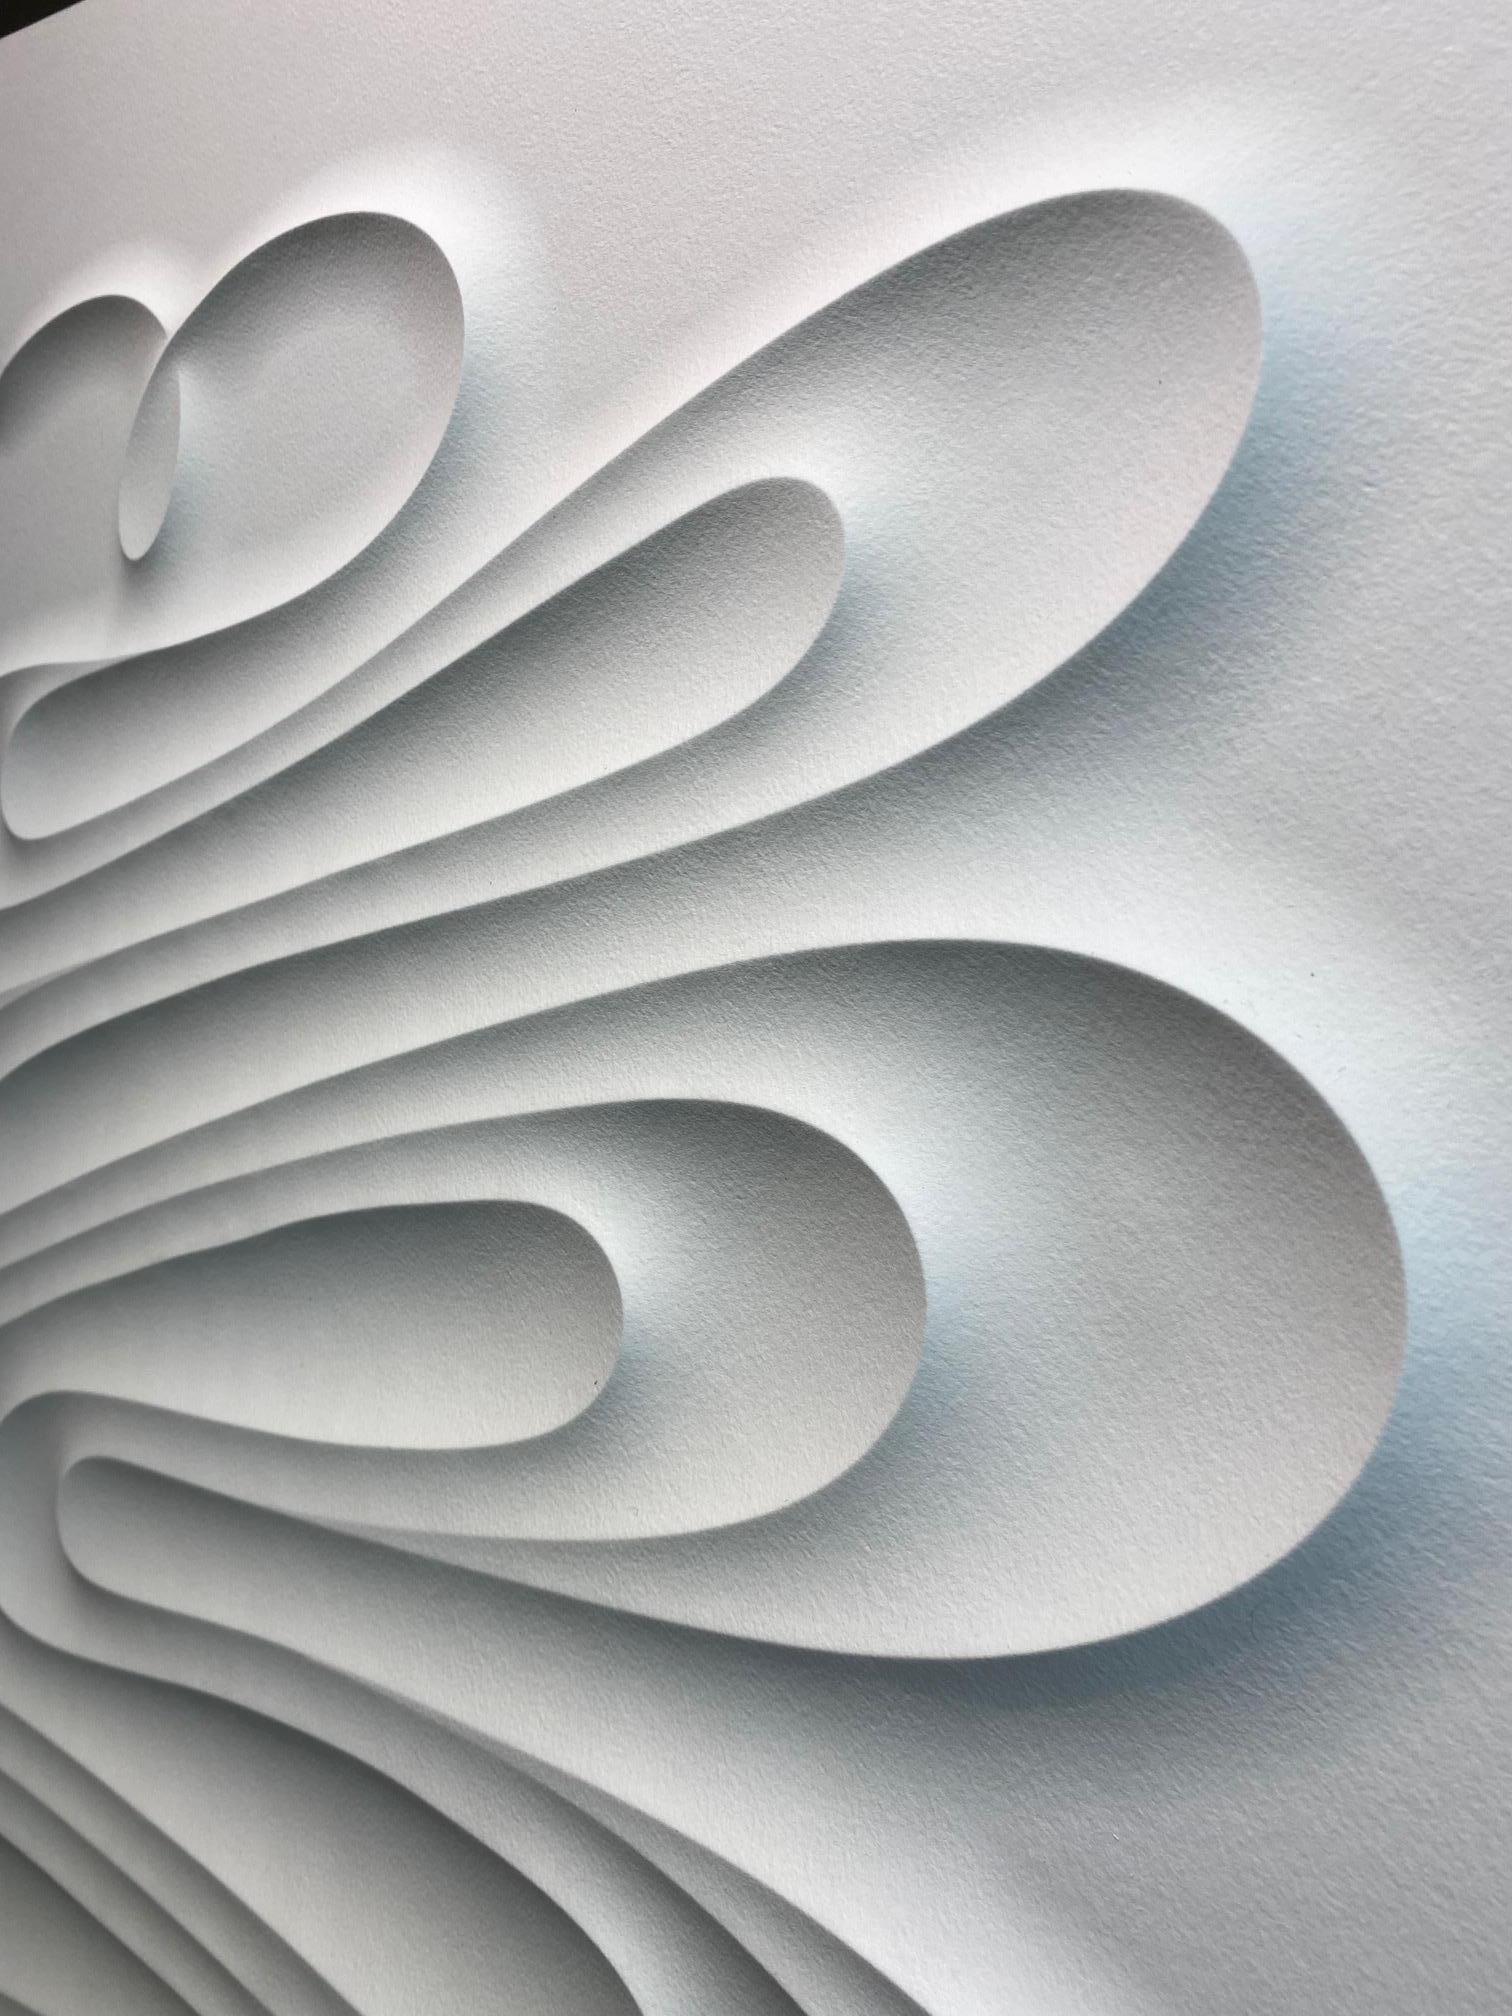 Tango - embossed paper work, minimalist curvilinear white artwork Jacinto Moros 2